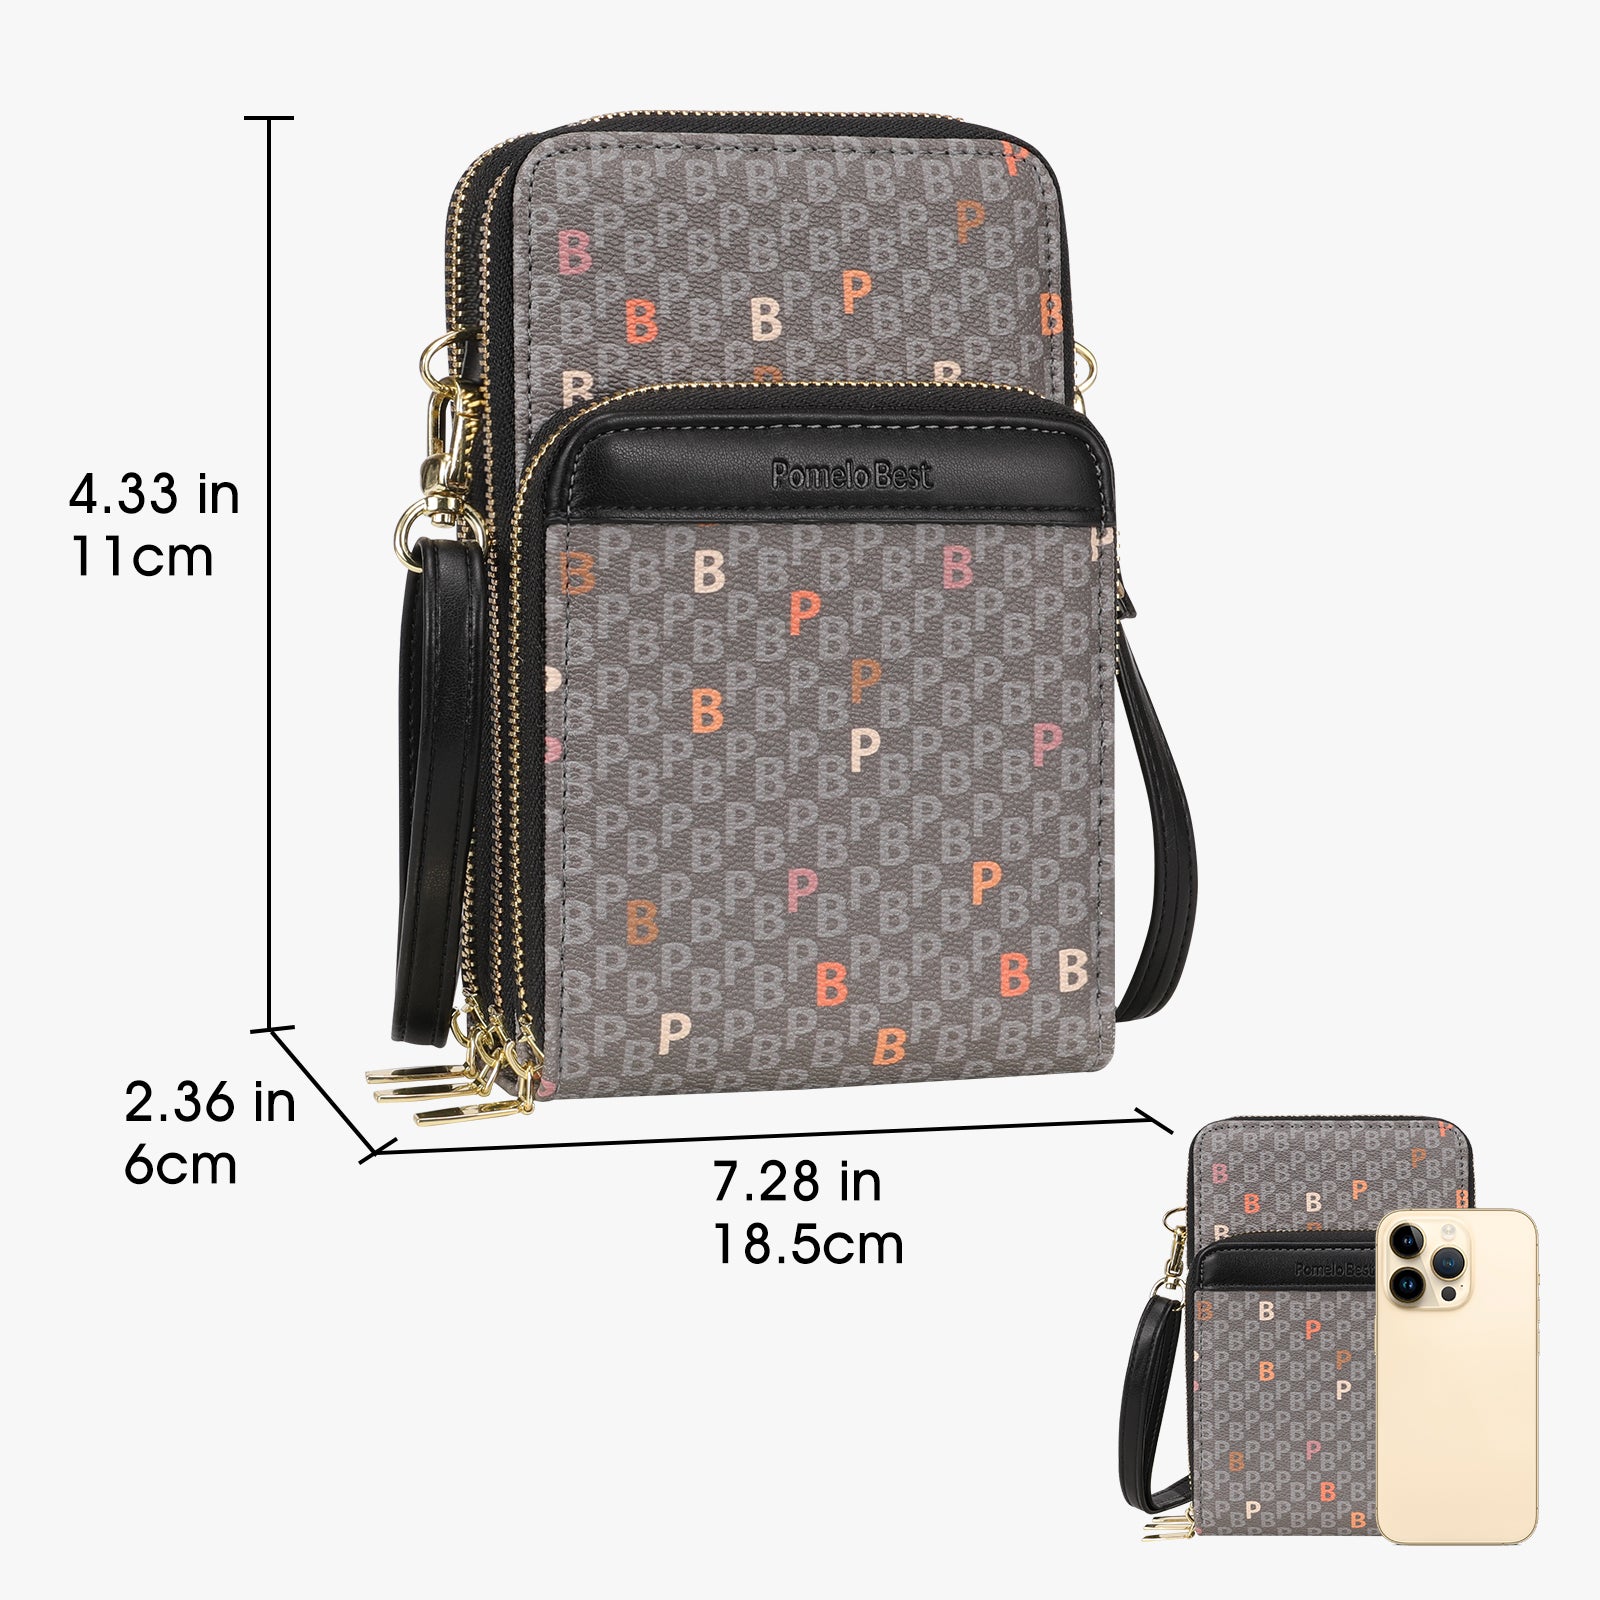 Béis 'The ID Crossbody Bag' In Beige - Crossbody Bag With ID Pocket